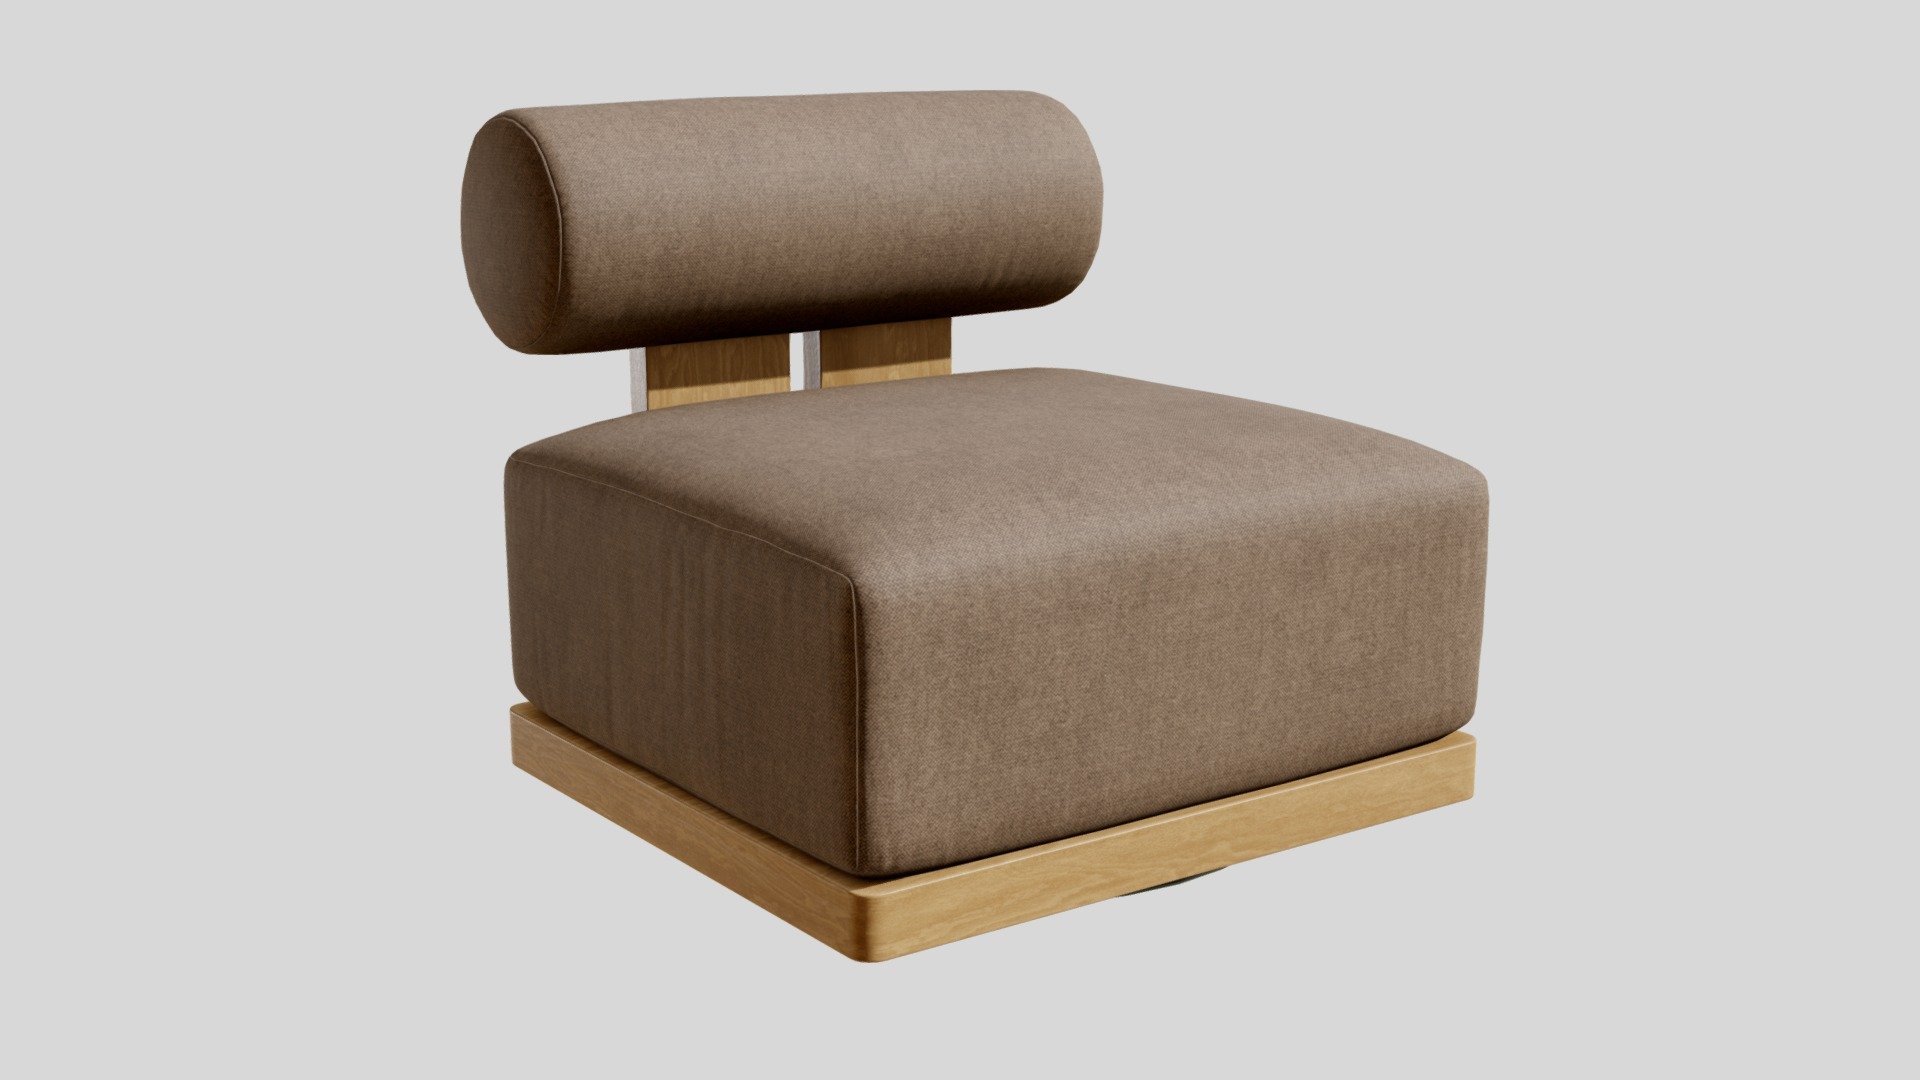 High-quality 3d model of a Restoration Hardware Vigo Teak Swivel Lounge Chair - Restoration Hardware Vigo Swivel Chair - Buy Royalty Free 3D model by 3detto 3d model